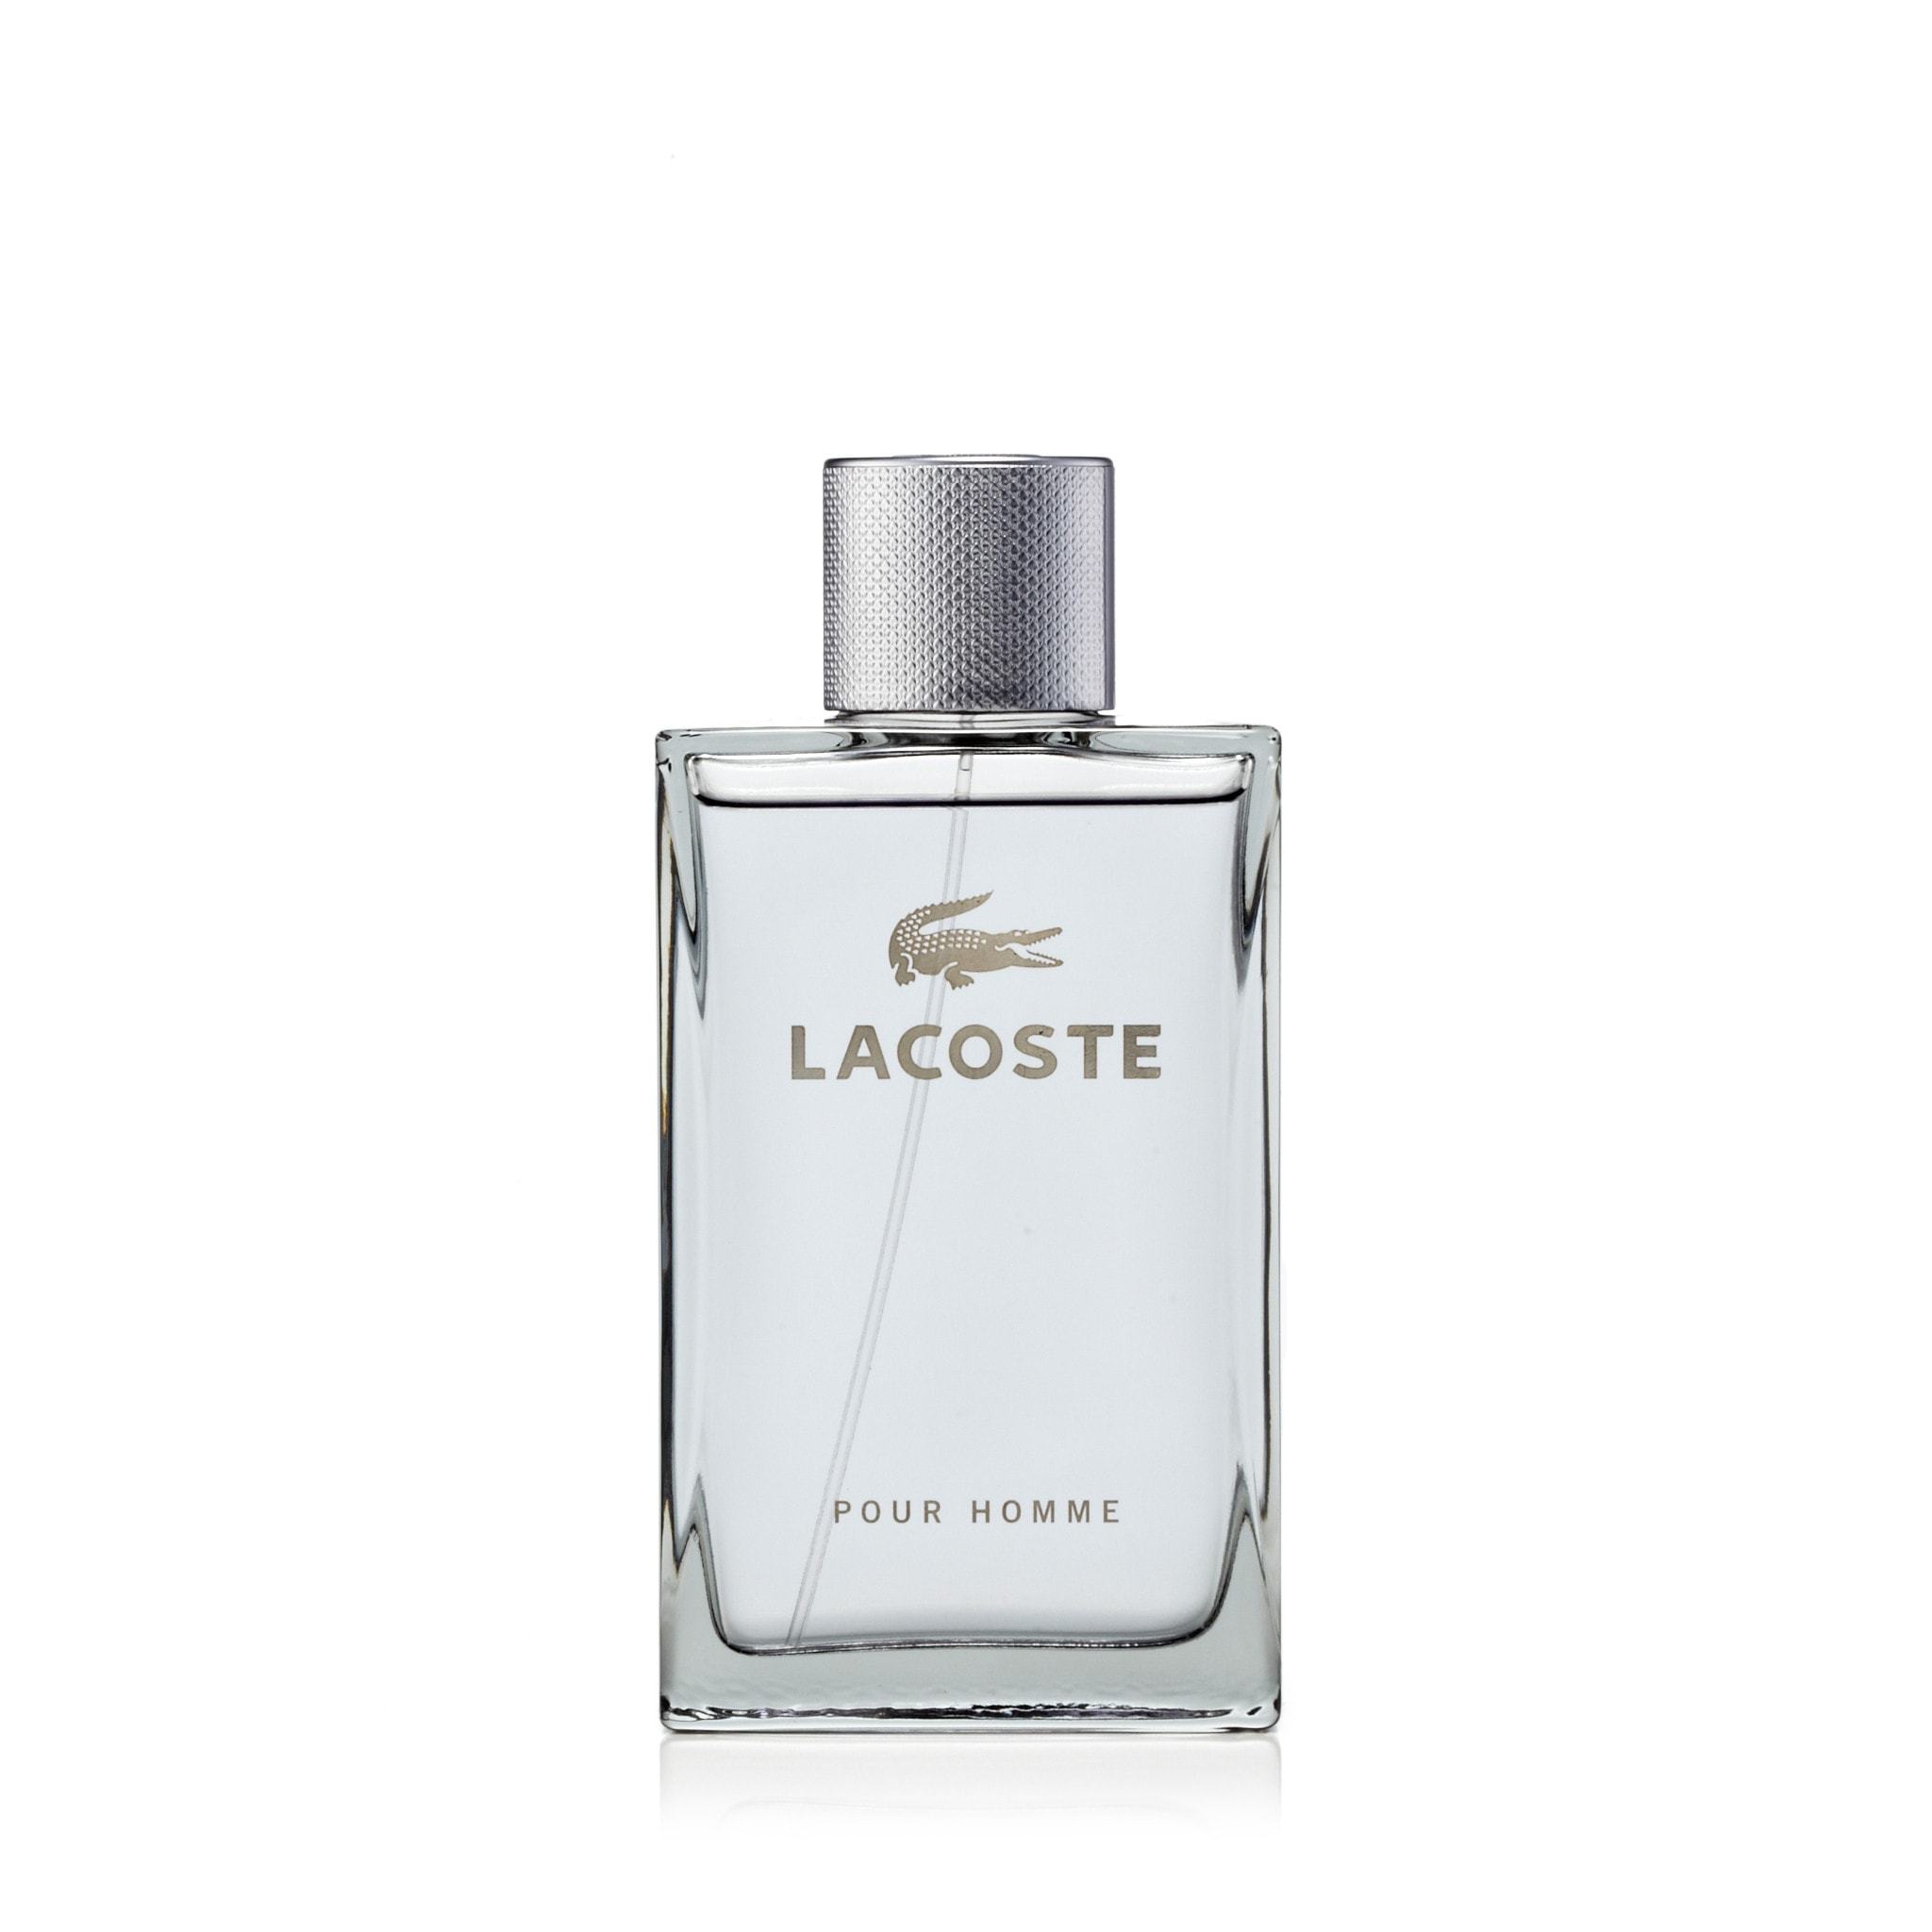 lacoste cologne clear bottle